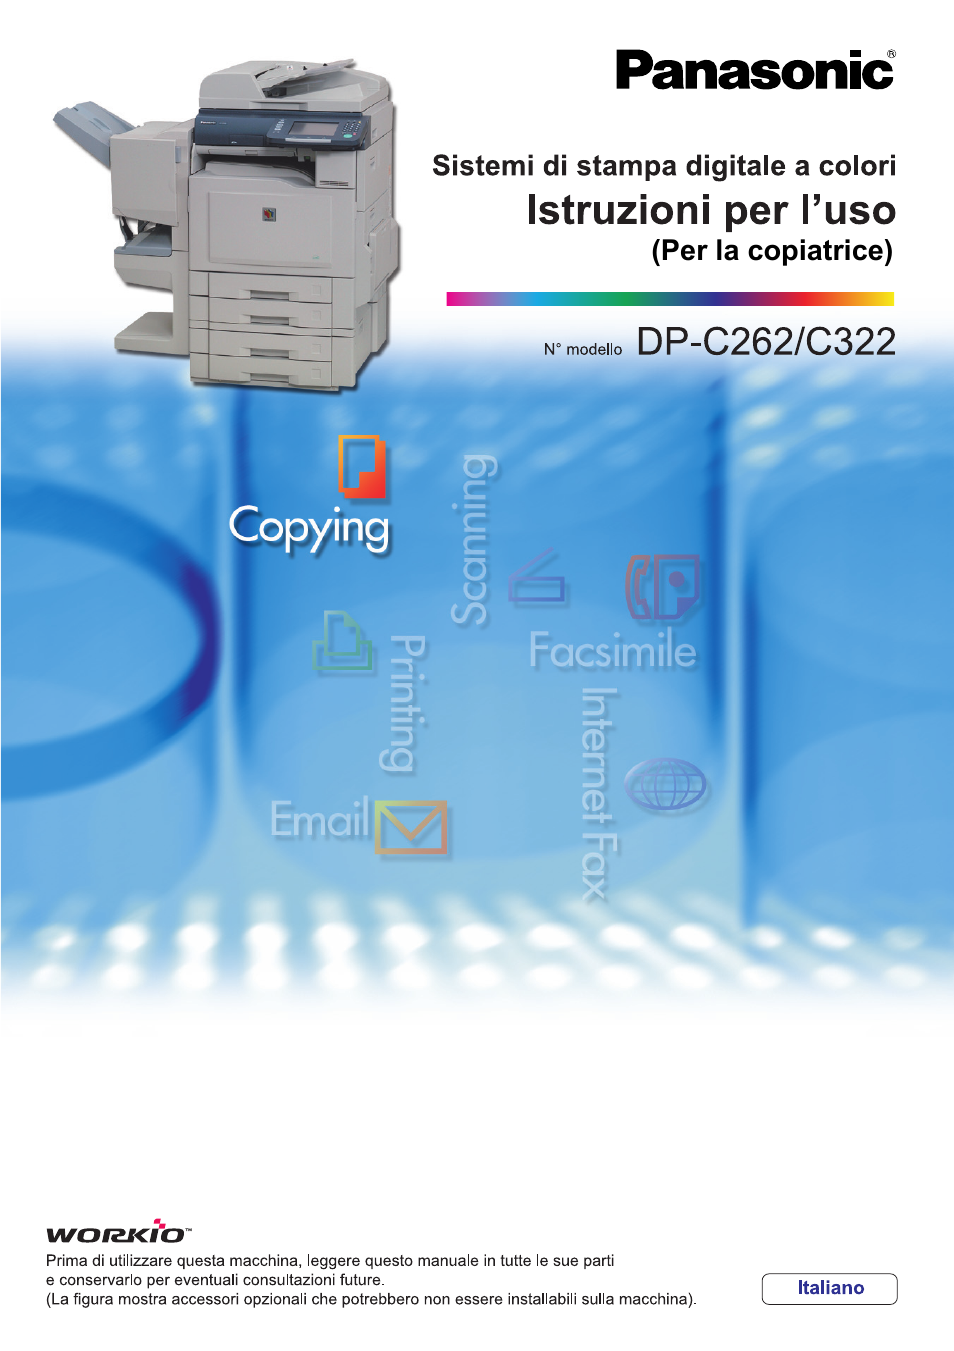 Panasonic DPC322 Manuale d'uso | Pagine: 100